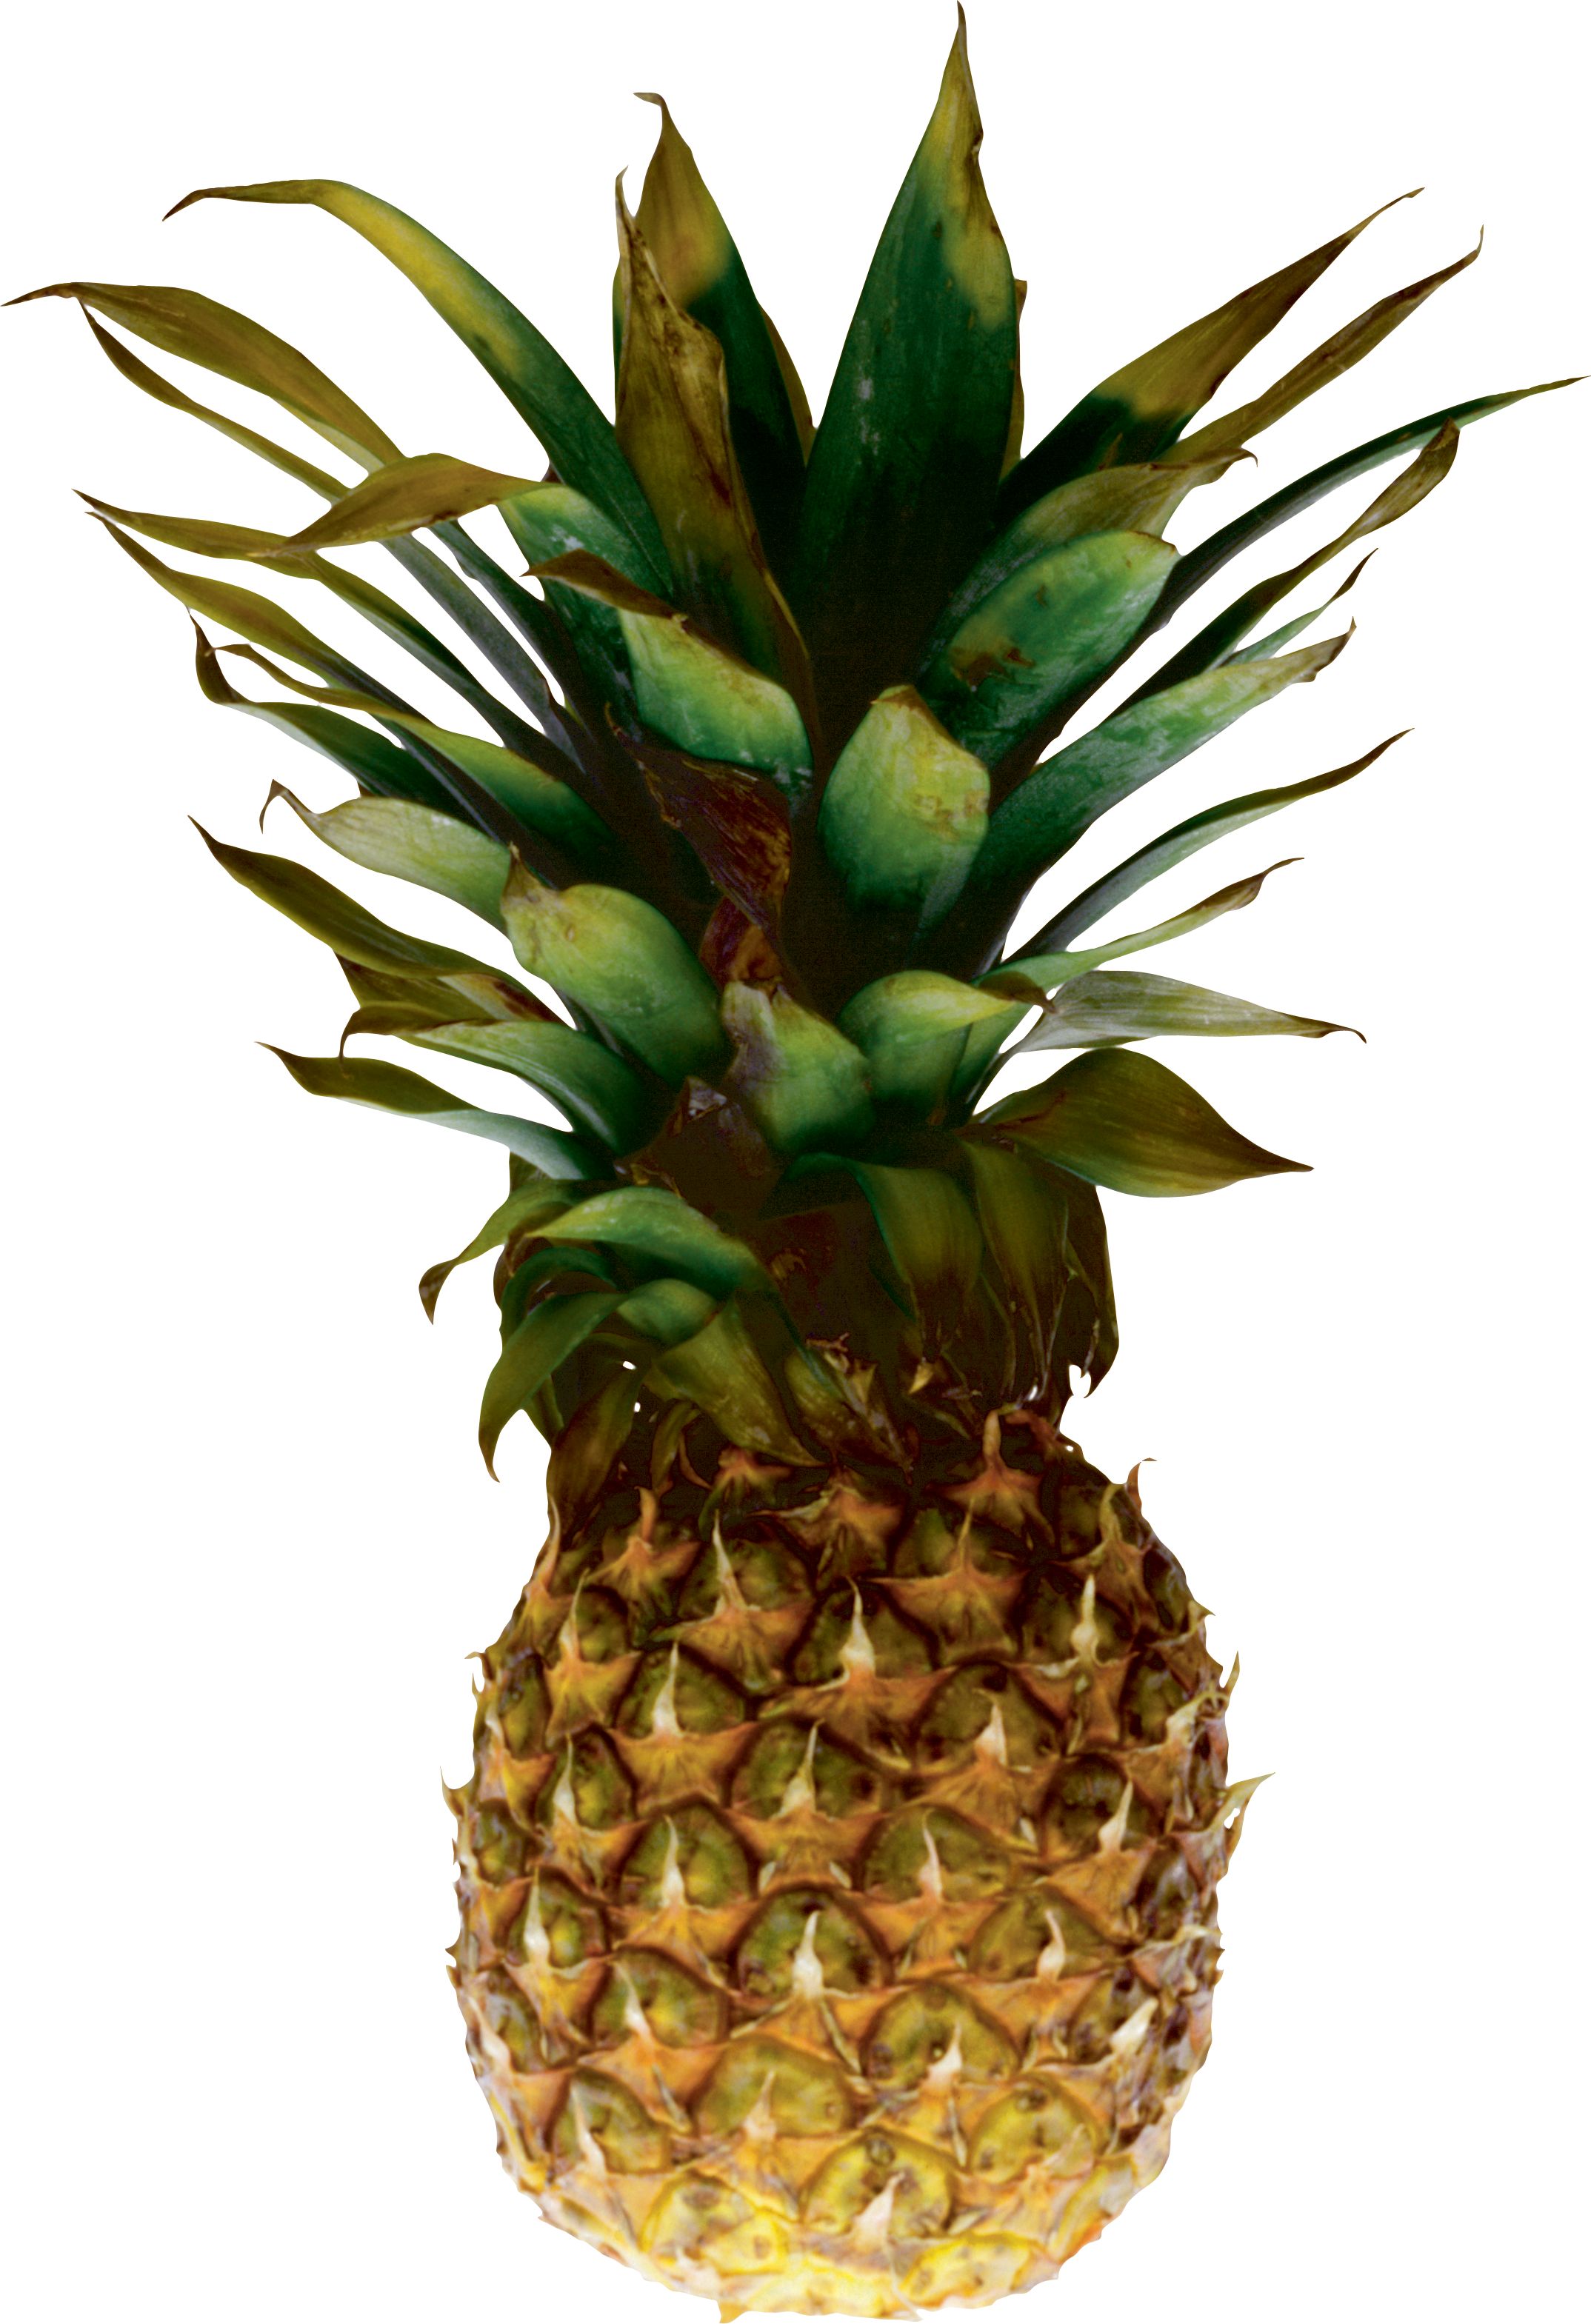 L'ananas